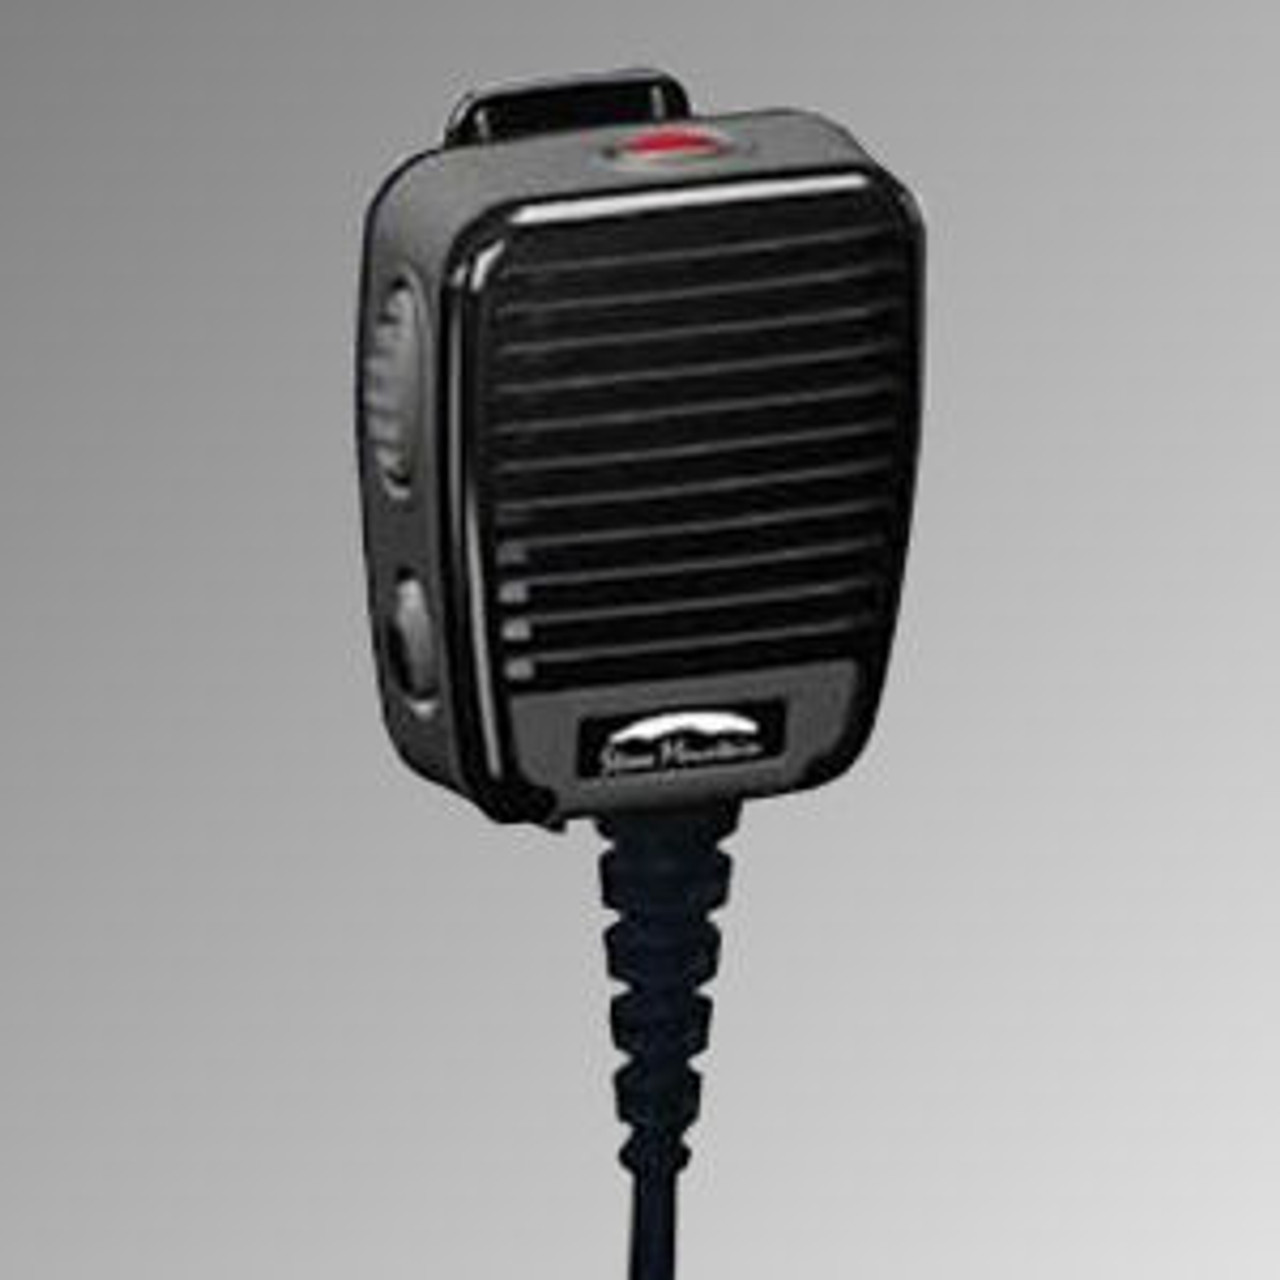 M/A-Com P5300 Ruggedized Waterproof IP68 High Volume Speaker Mic